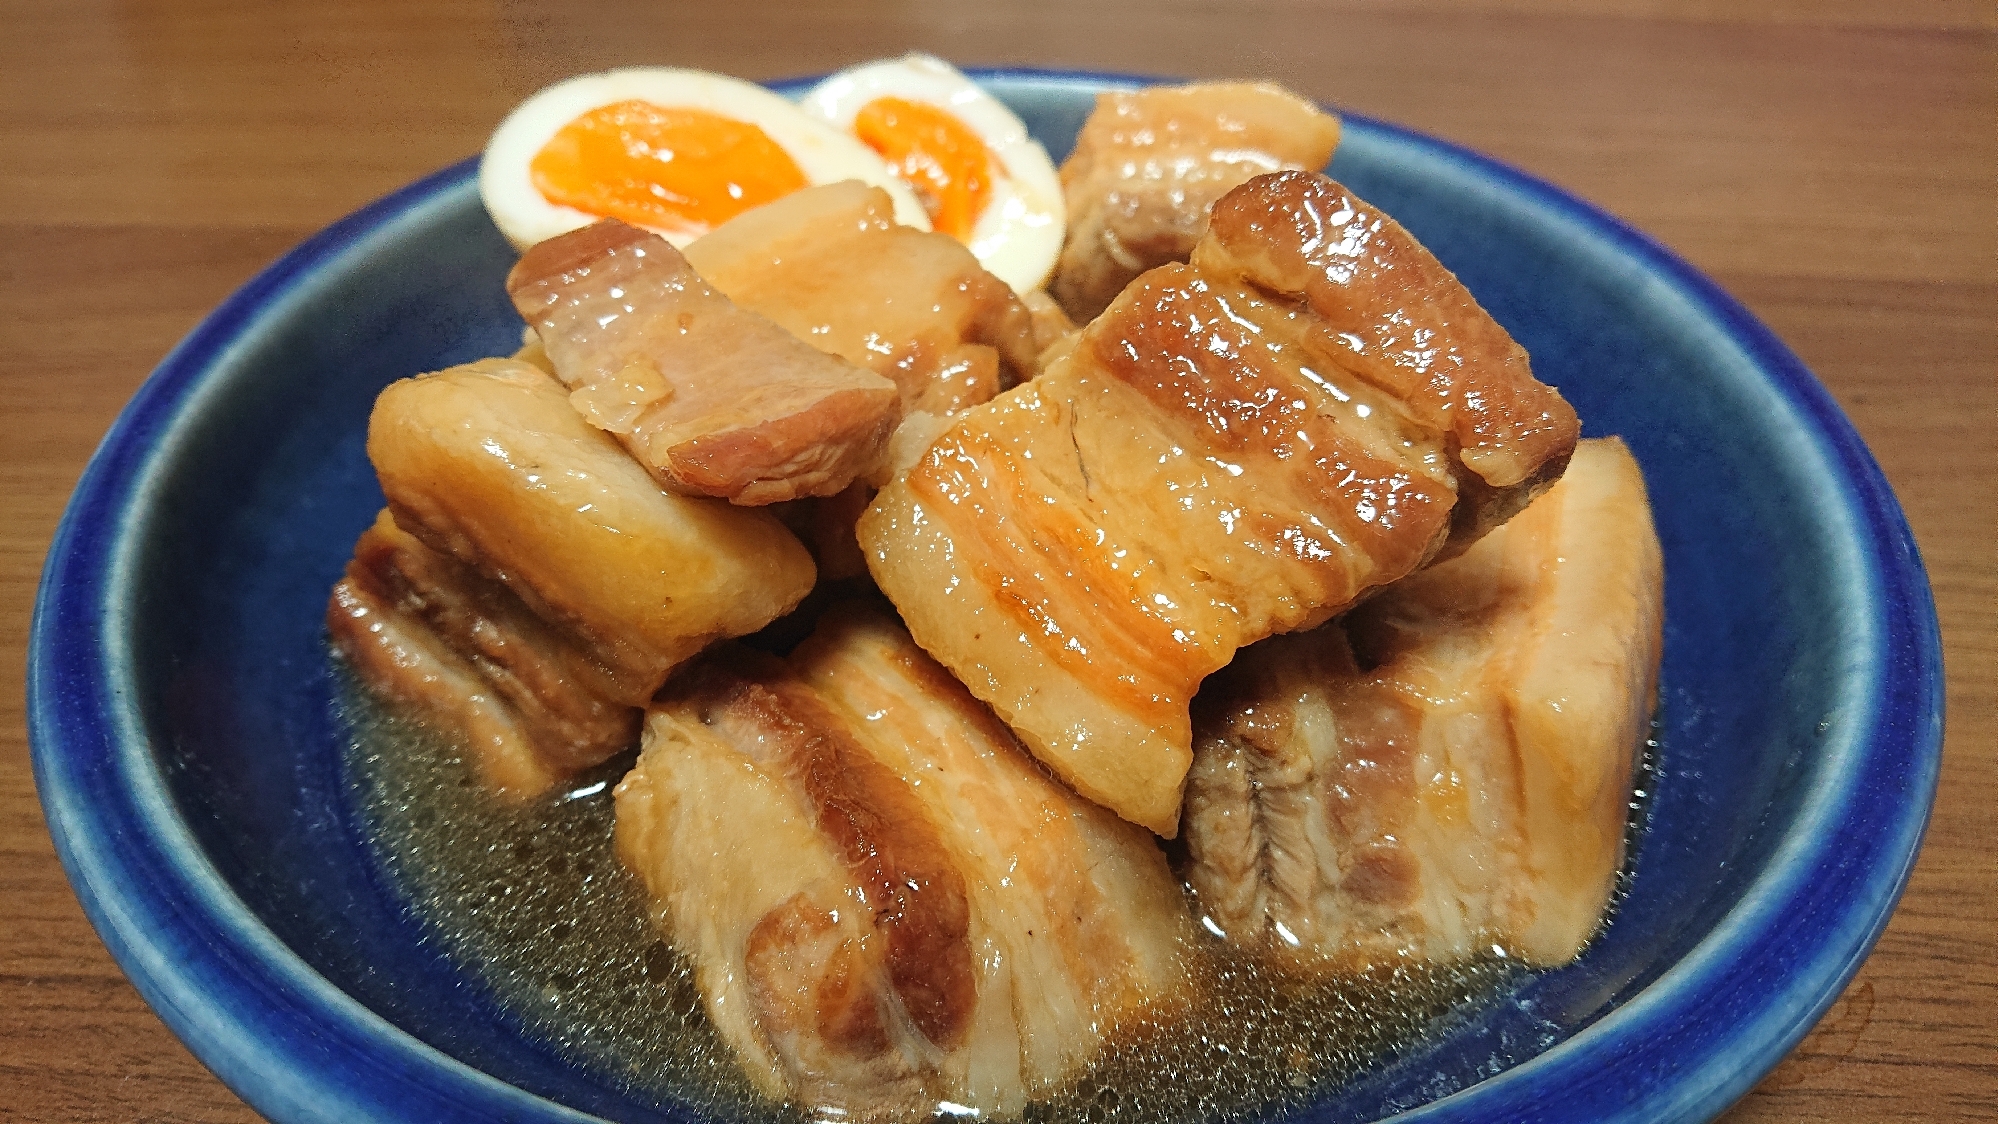 The KAKUNI(豚の角煮)